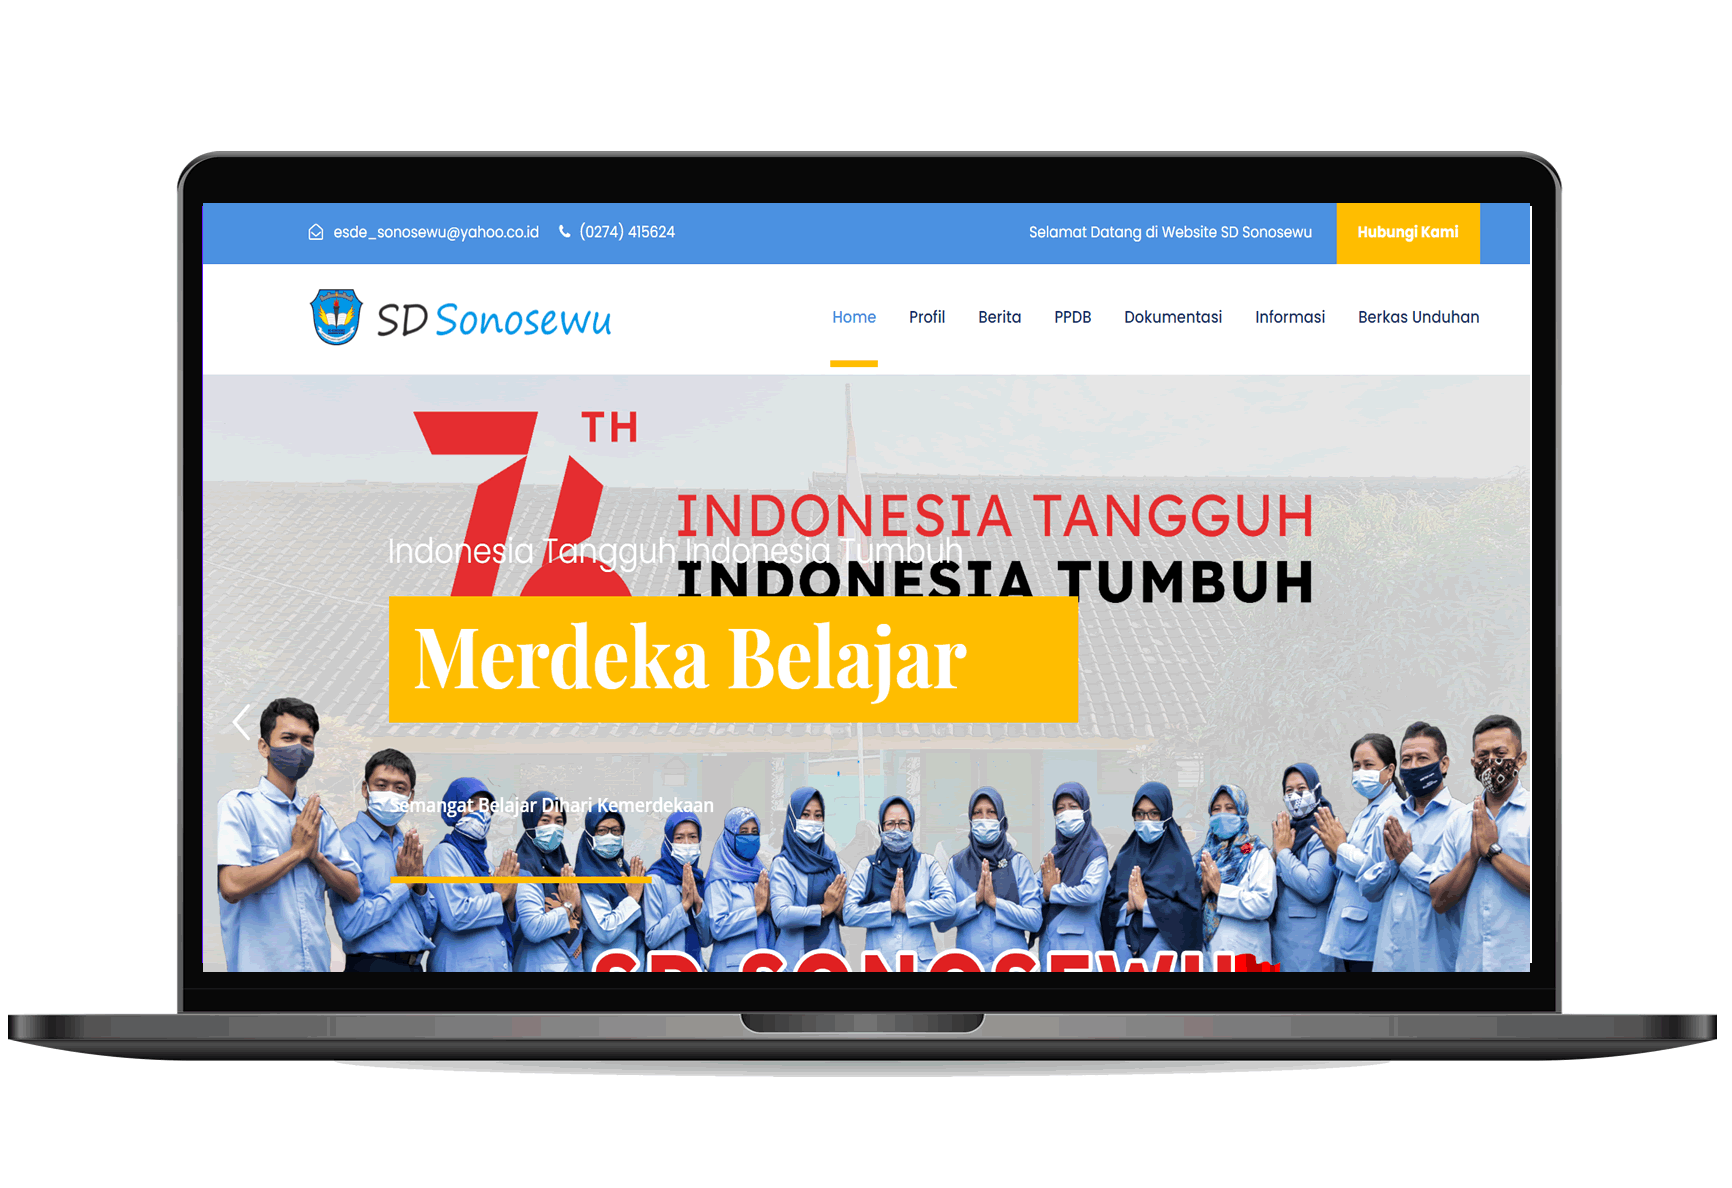 Website Informasi Sekolah - SD Sonosewu